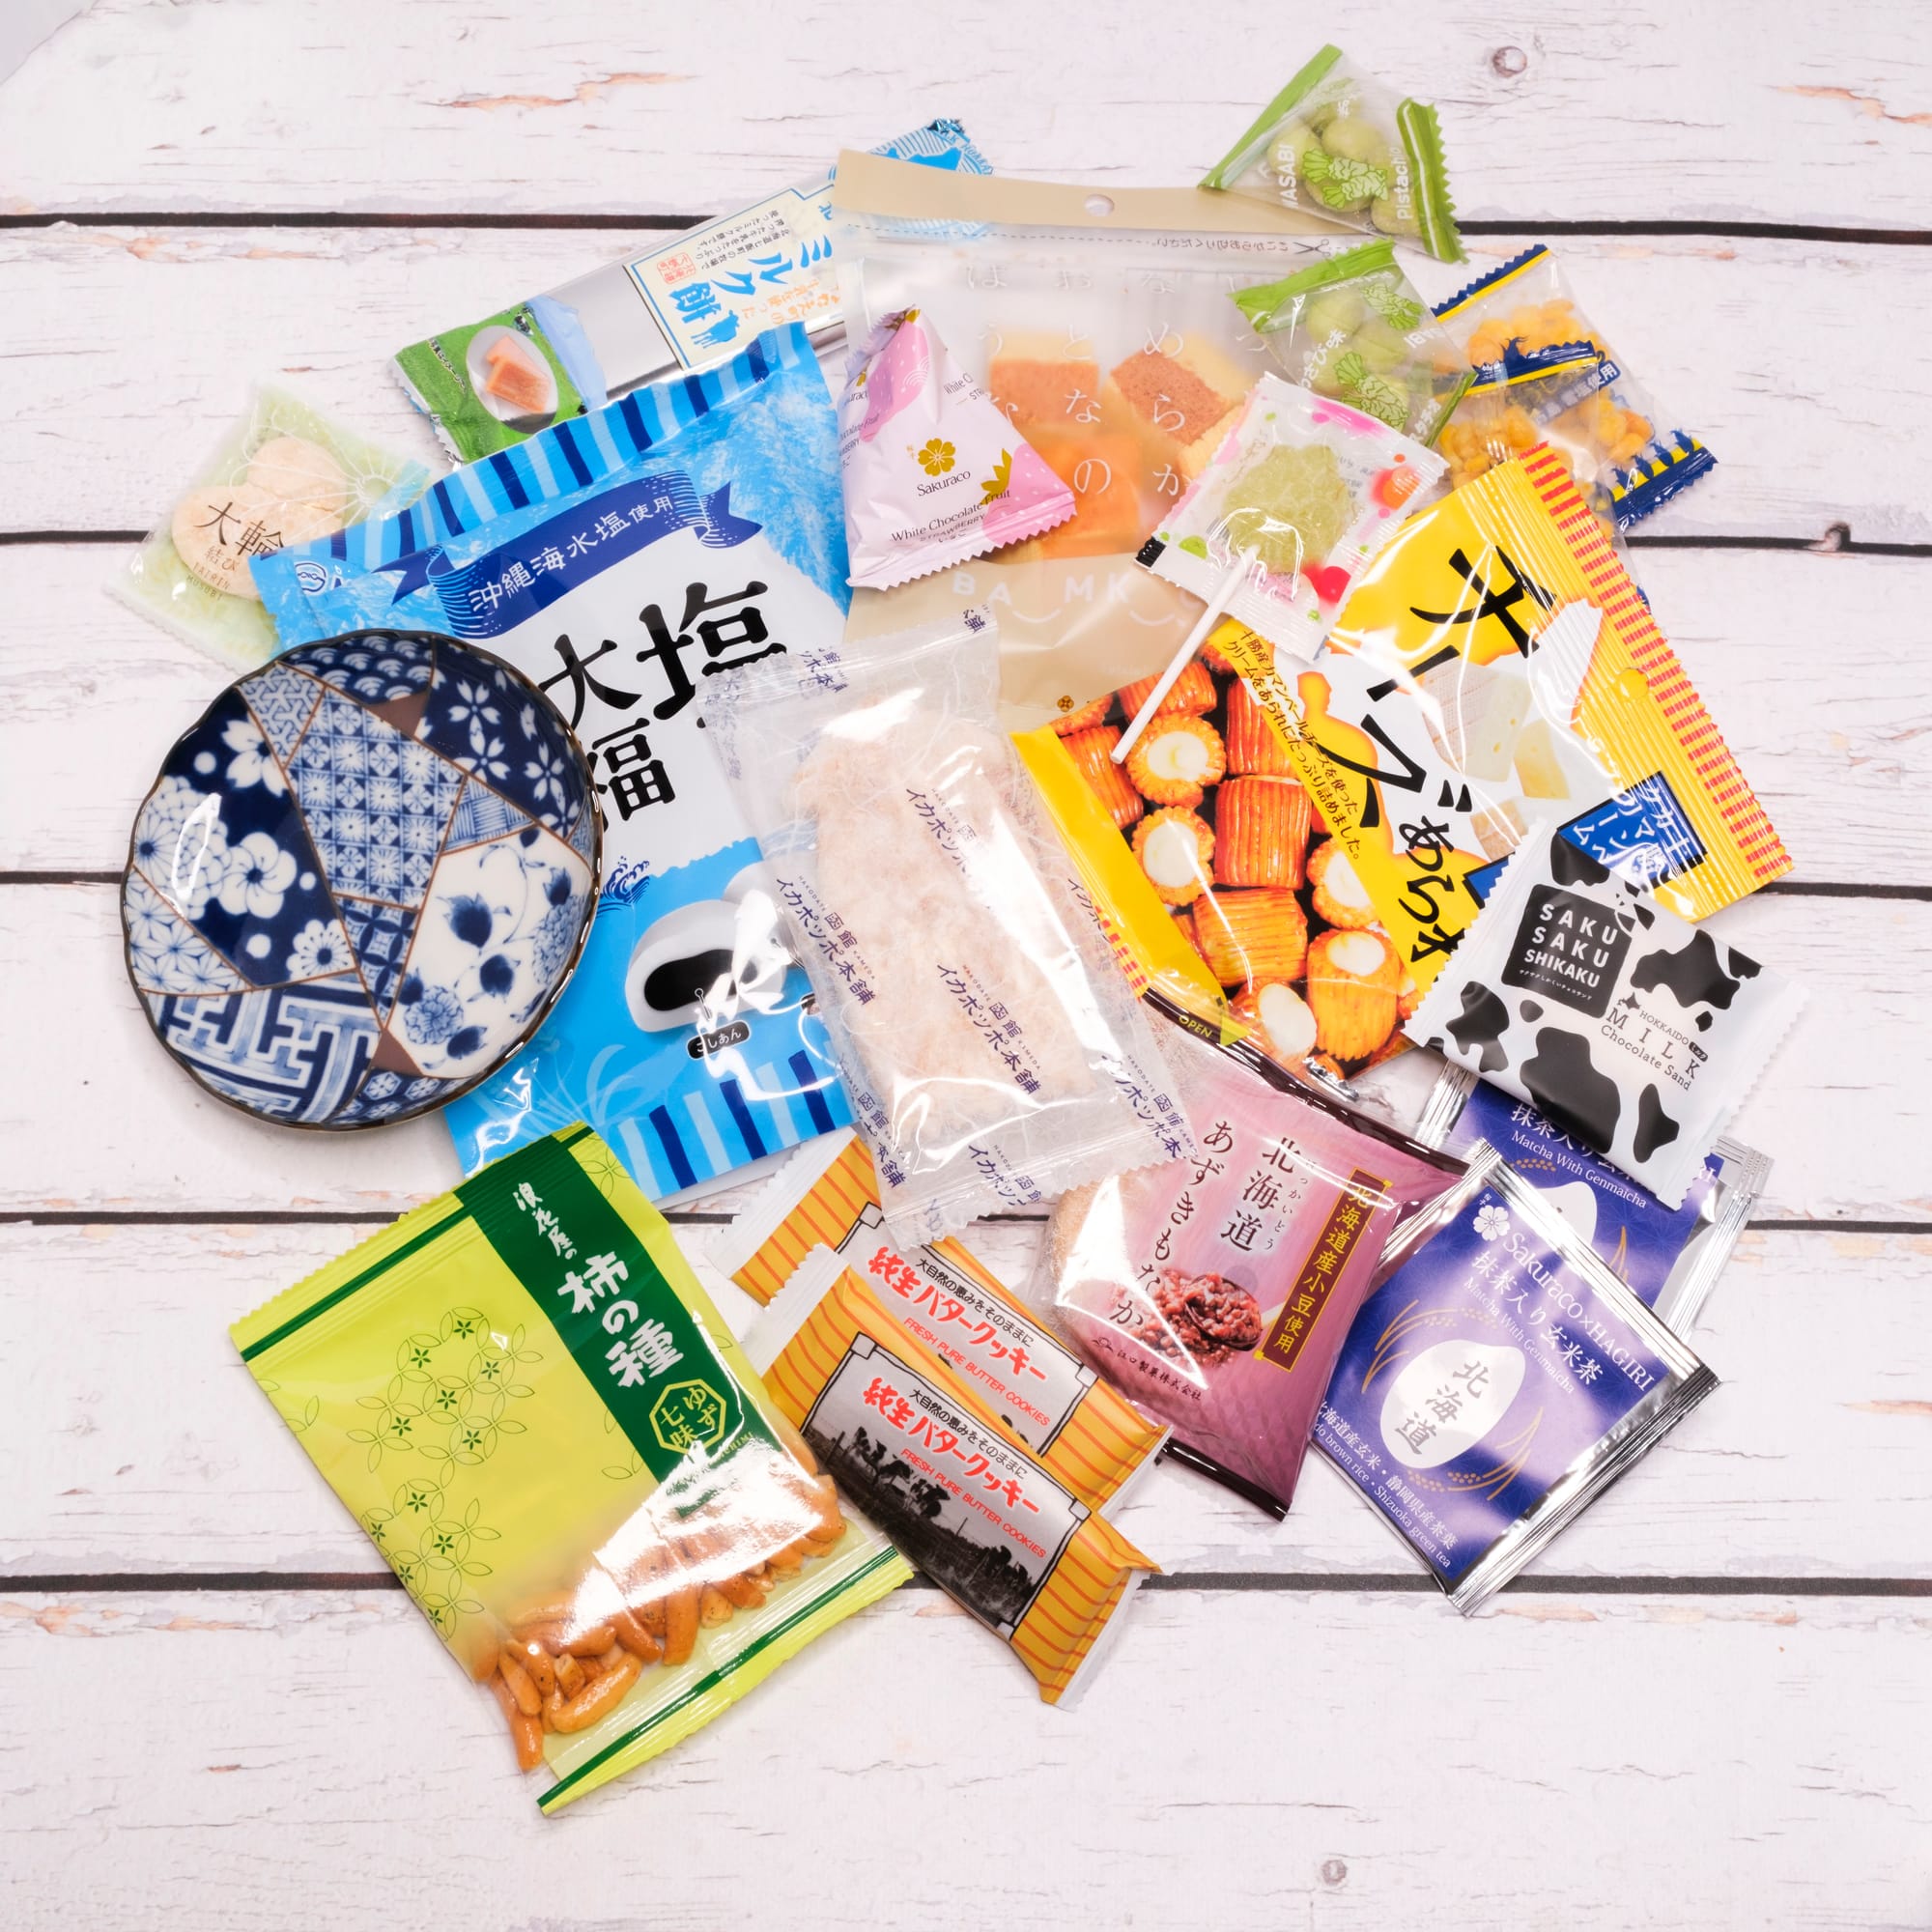 Sakuraco Subscription Box - All Snacks